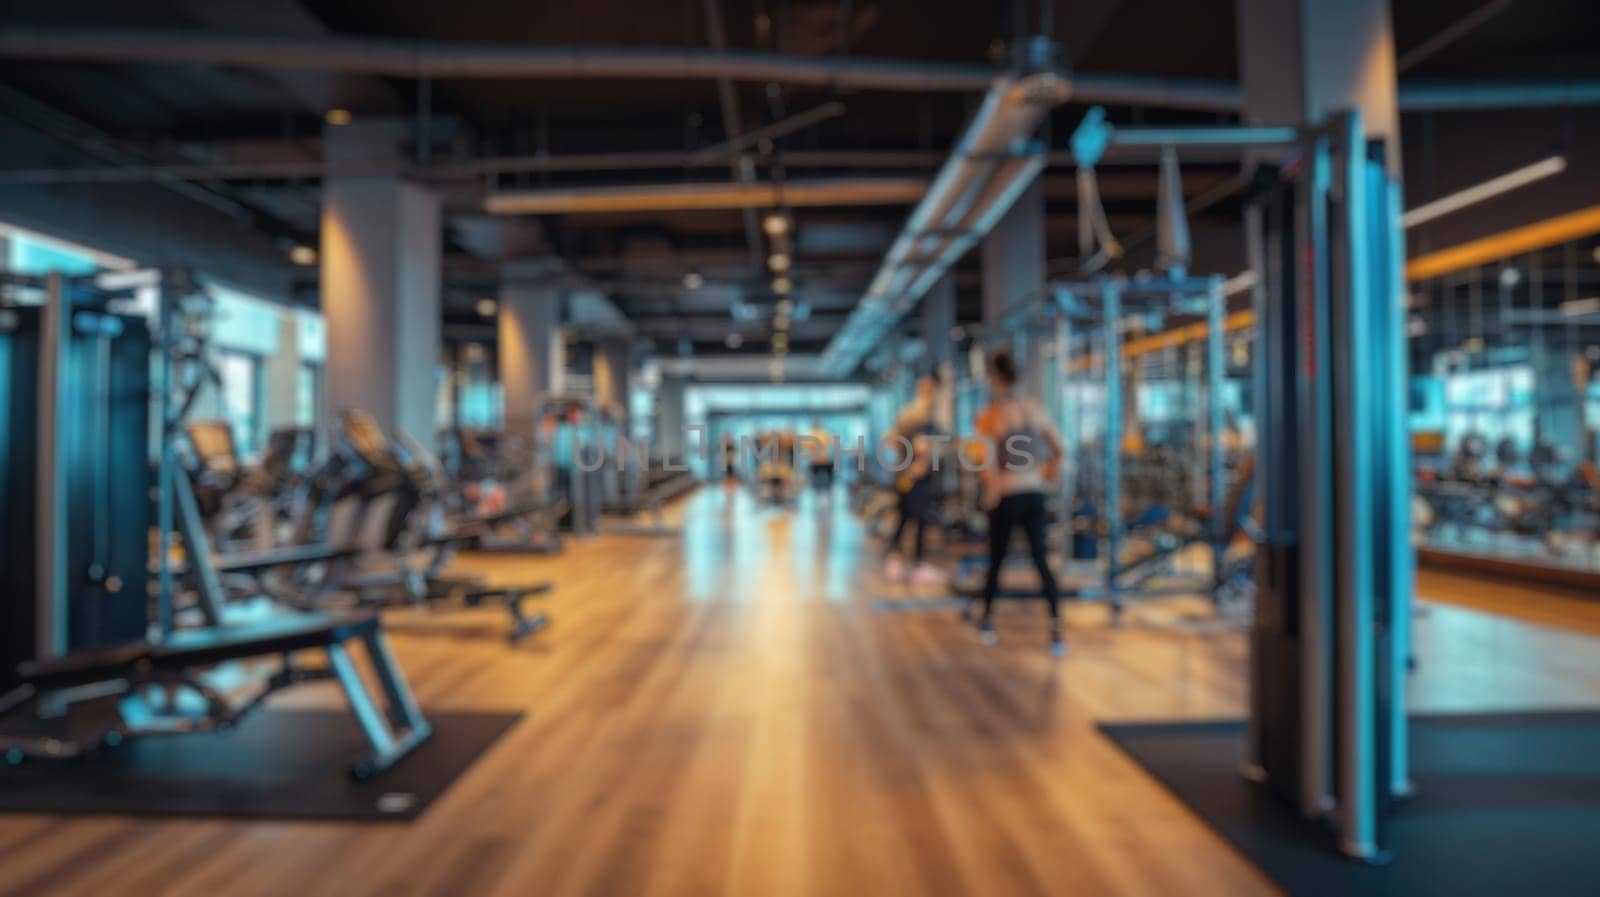 Blurred Fitness Gym Interior. Resplendent. by biancoblue